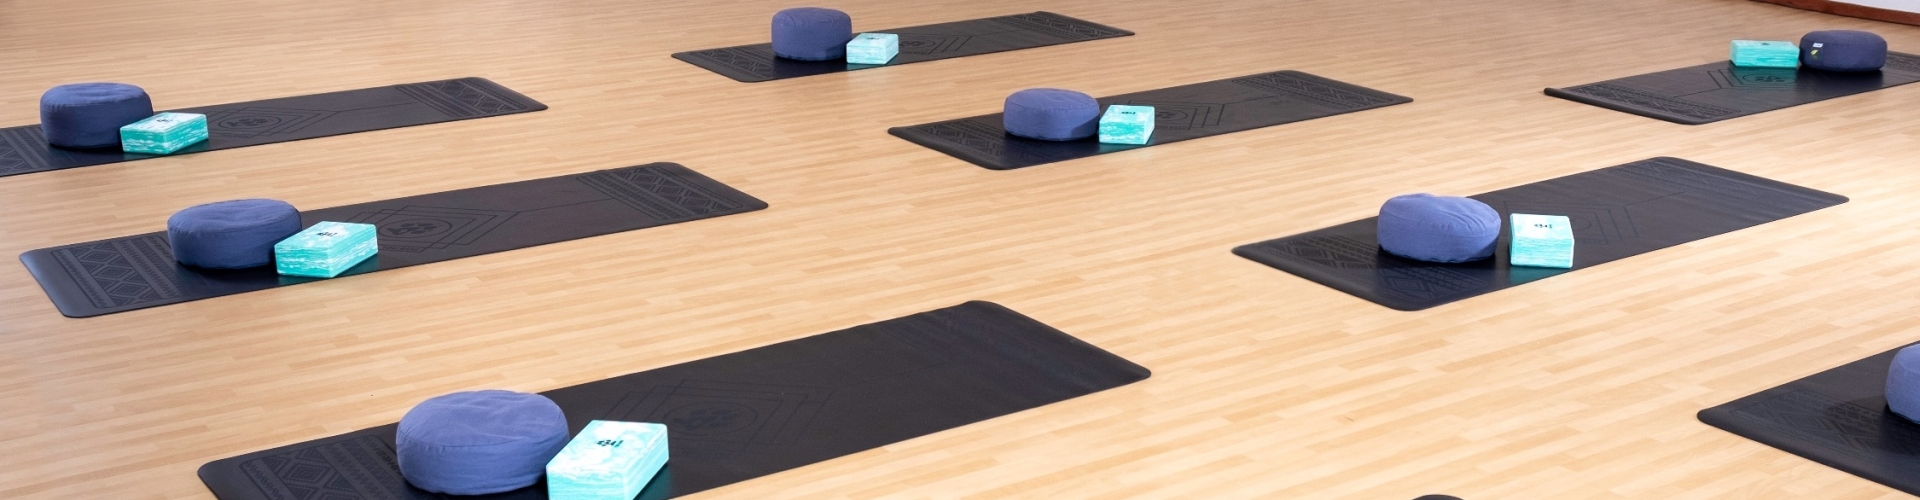 ruime yogastudio van Yoga Flow Zuidlaren